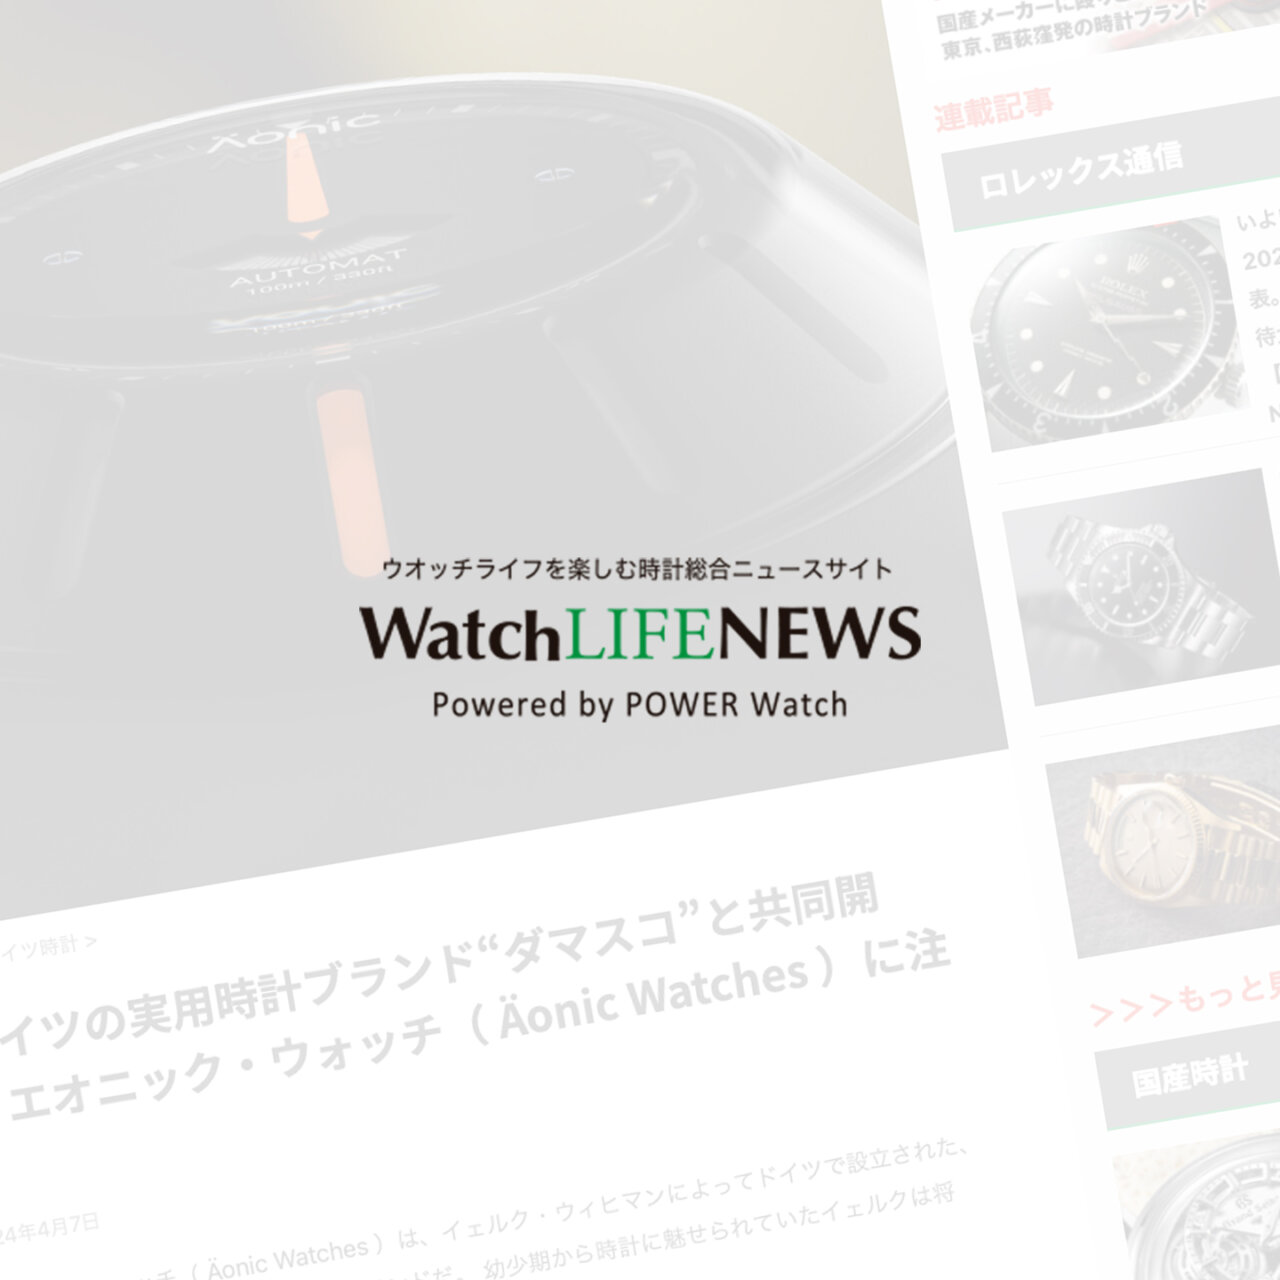 aeonic-news-watch-life-news-2